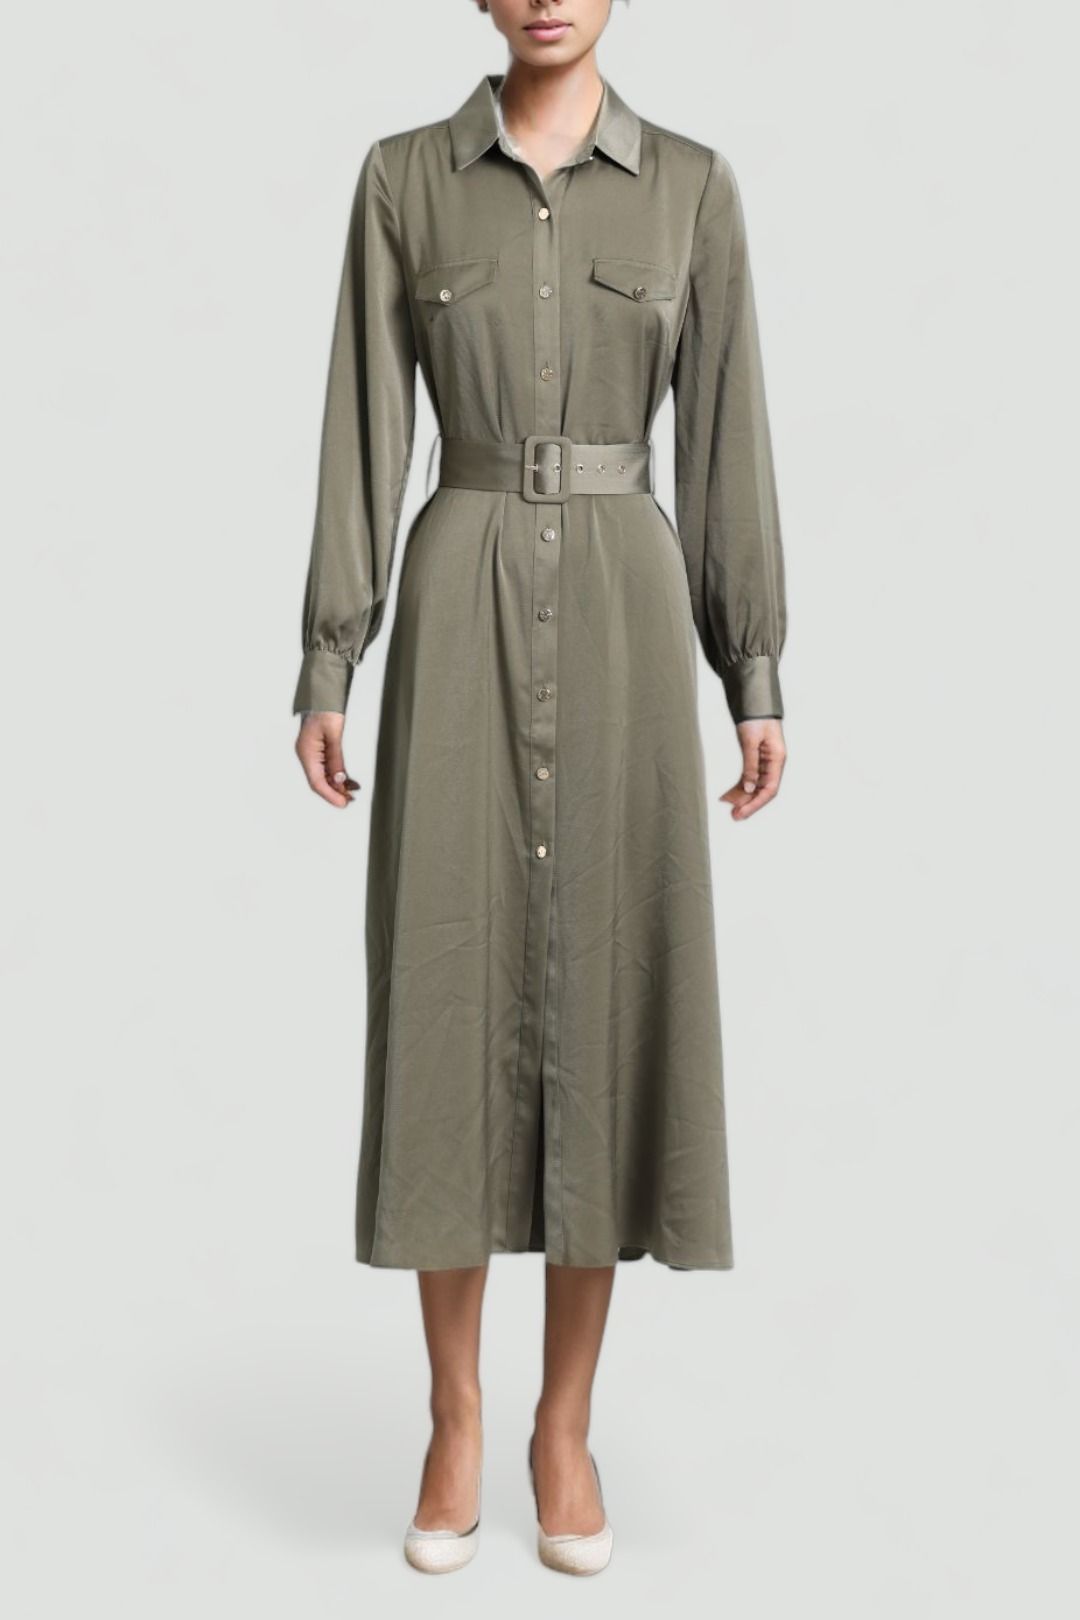 Portmans - Yvonne Satin Shirt Dress Olive